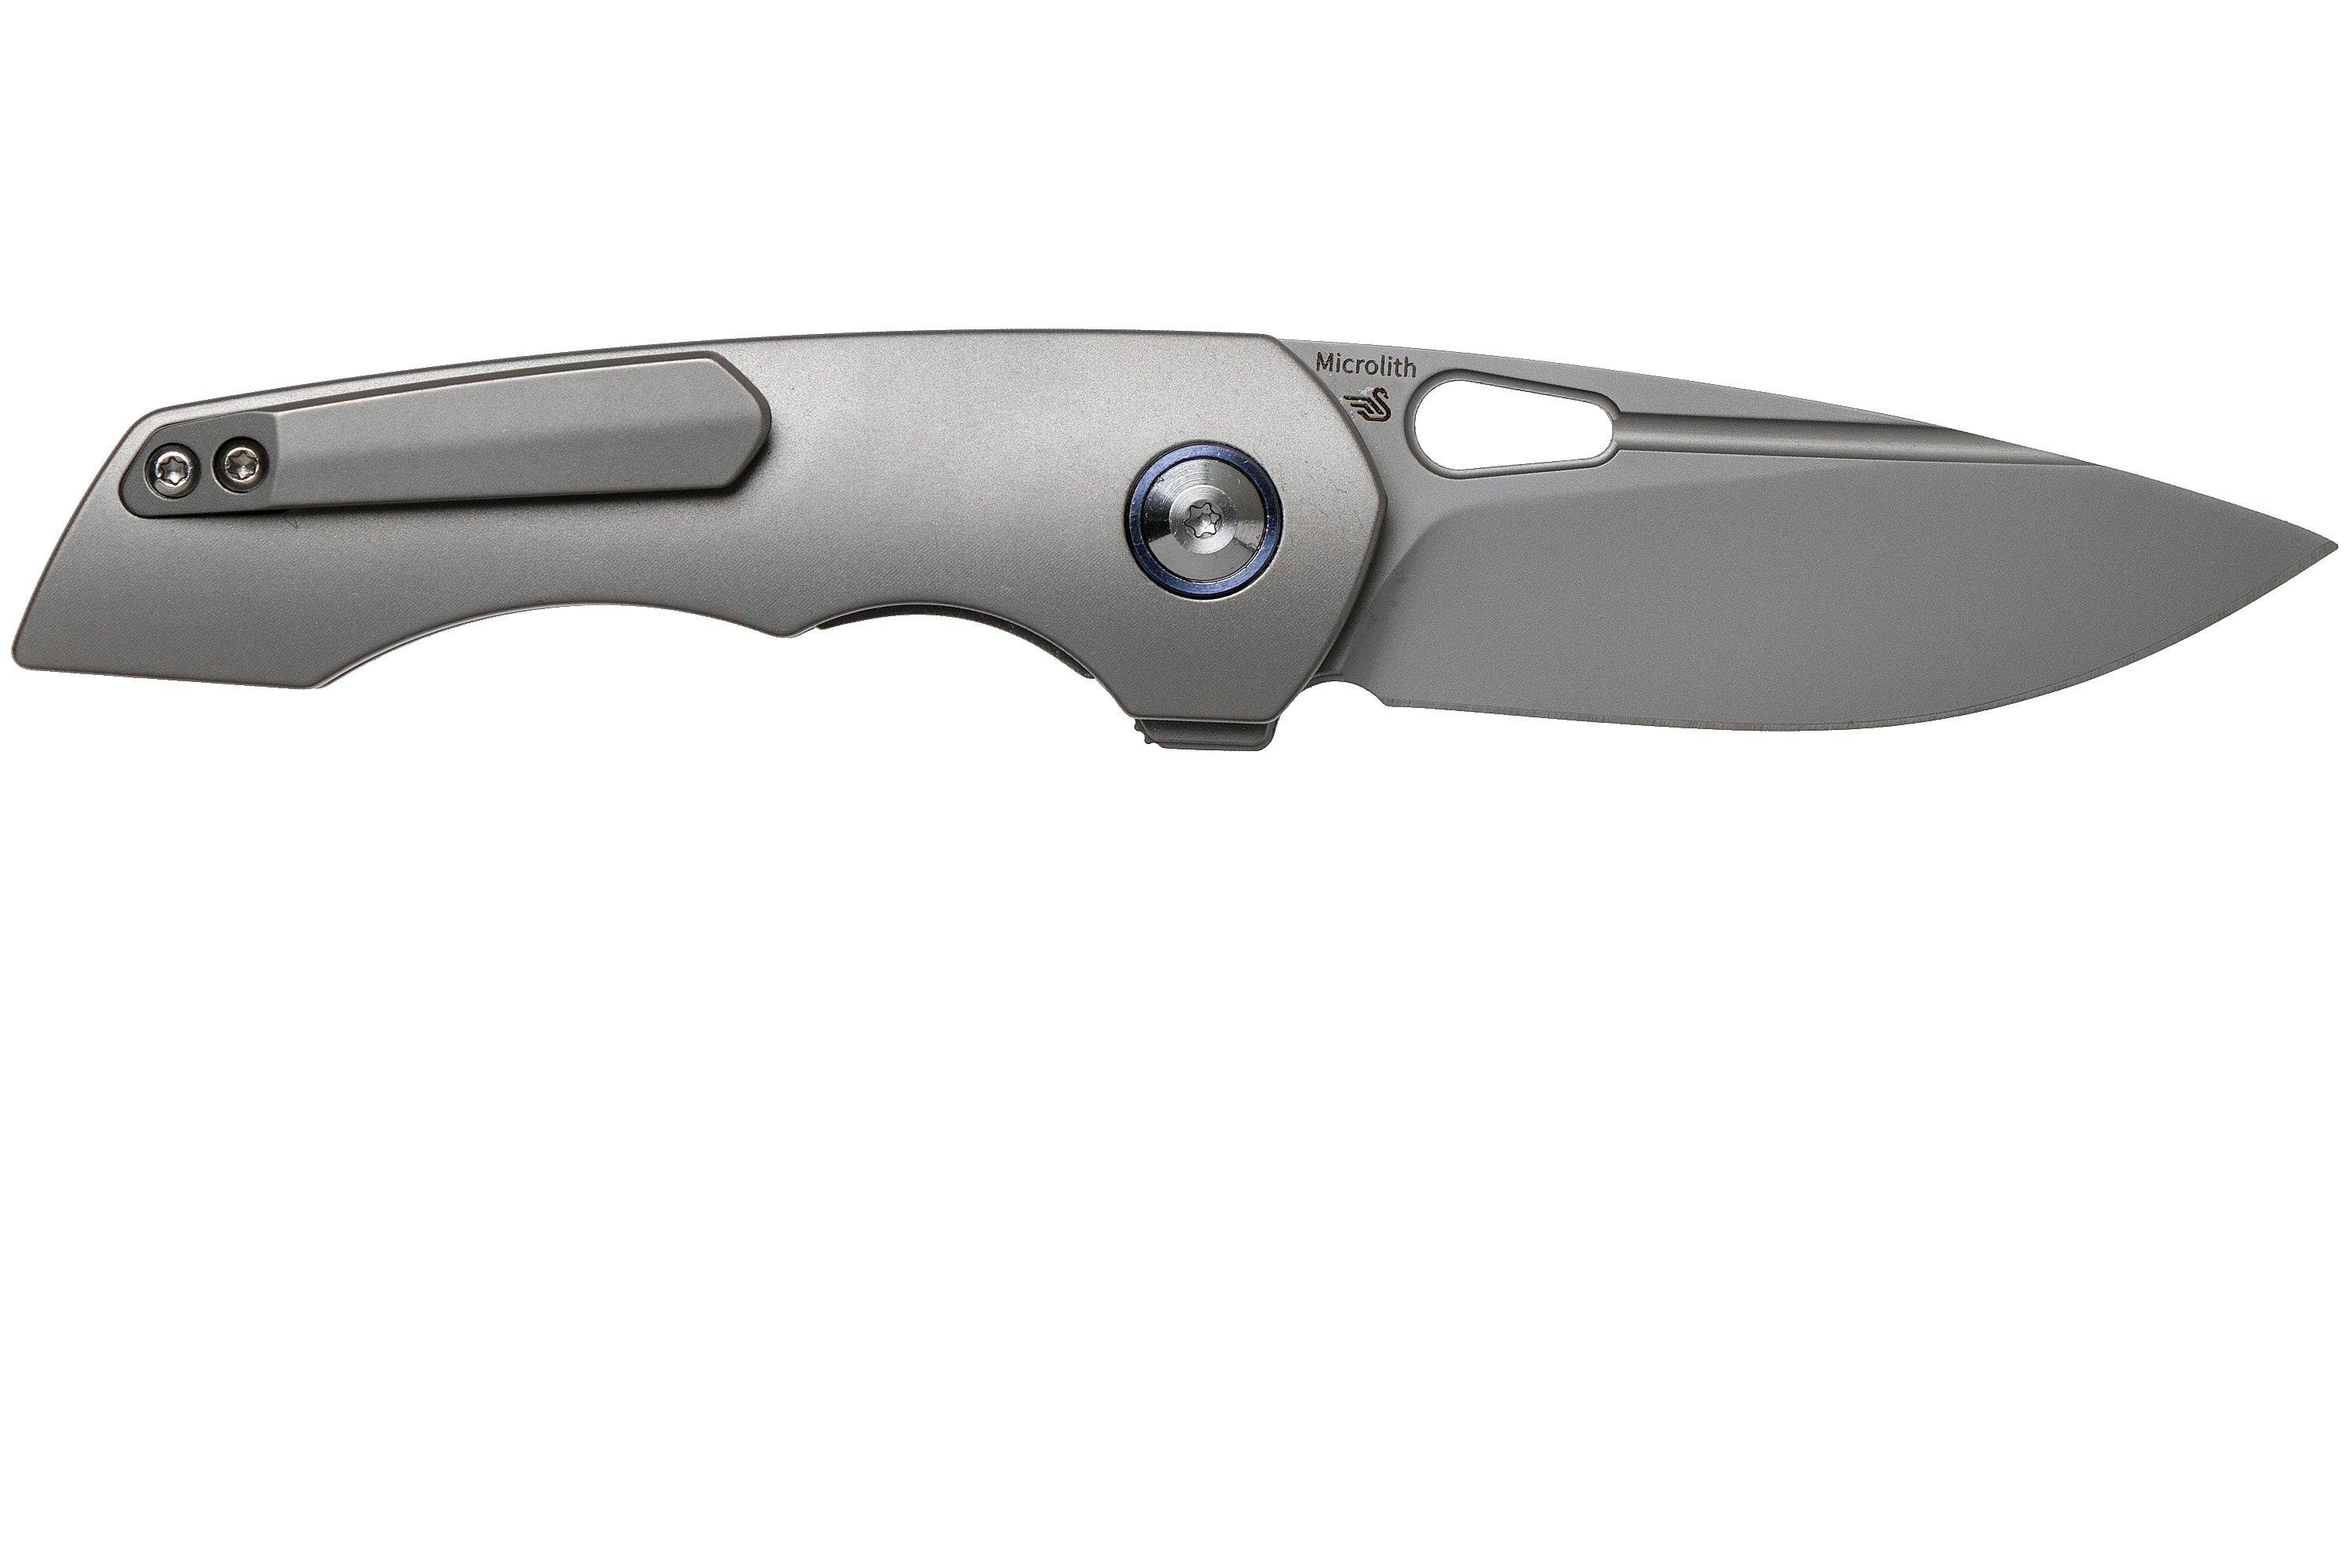 Kizer Microlith Ki2533A1 Titanium pocket knife, Nick Swan design 